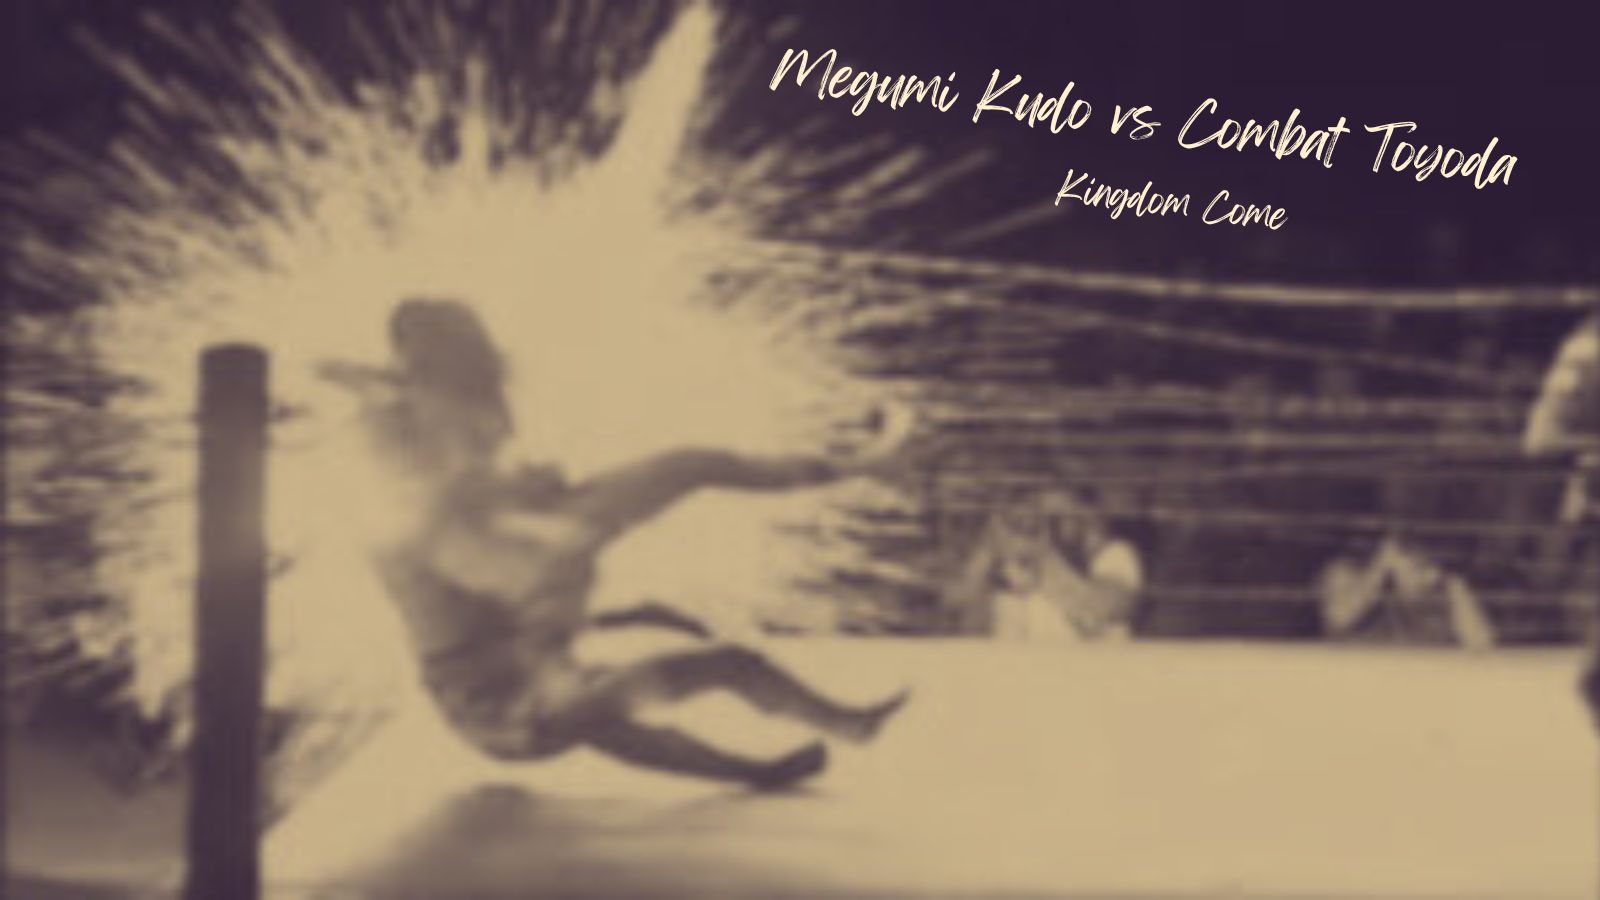 Megumi Kudo vs Combat Toyoda: Kingdom Come